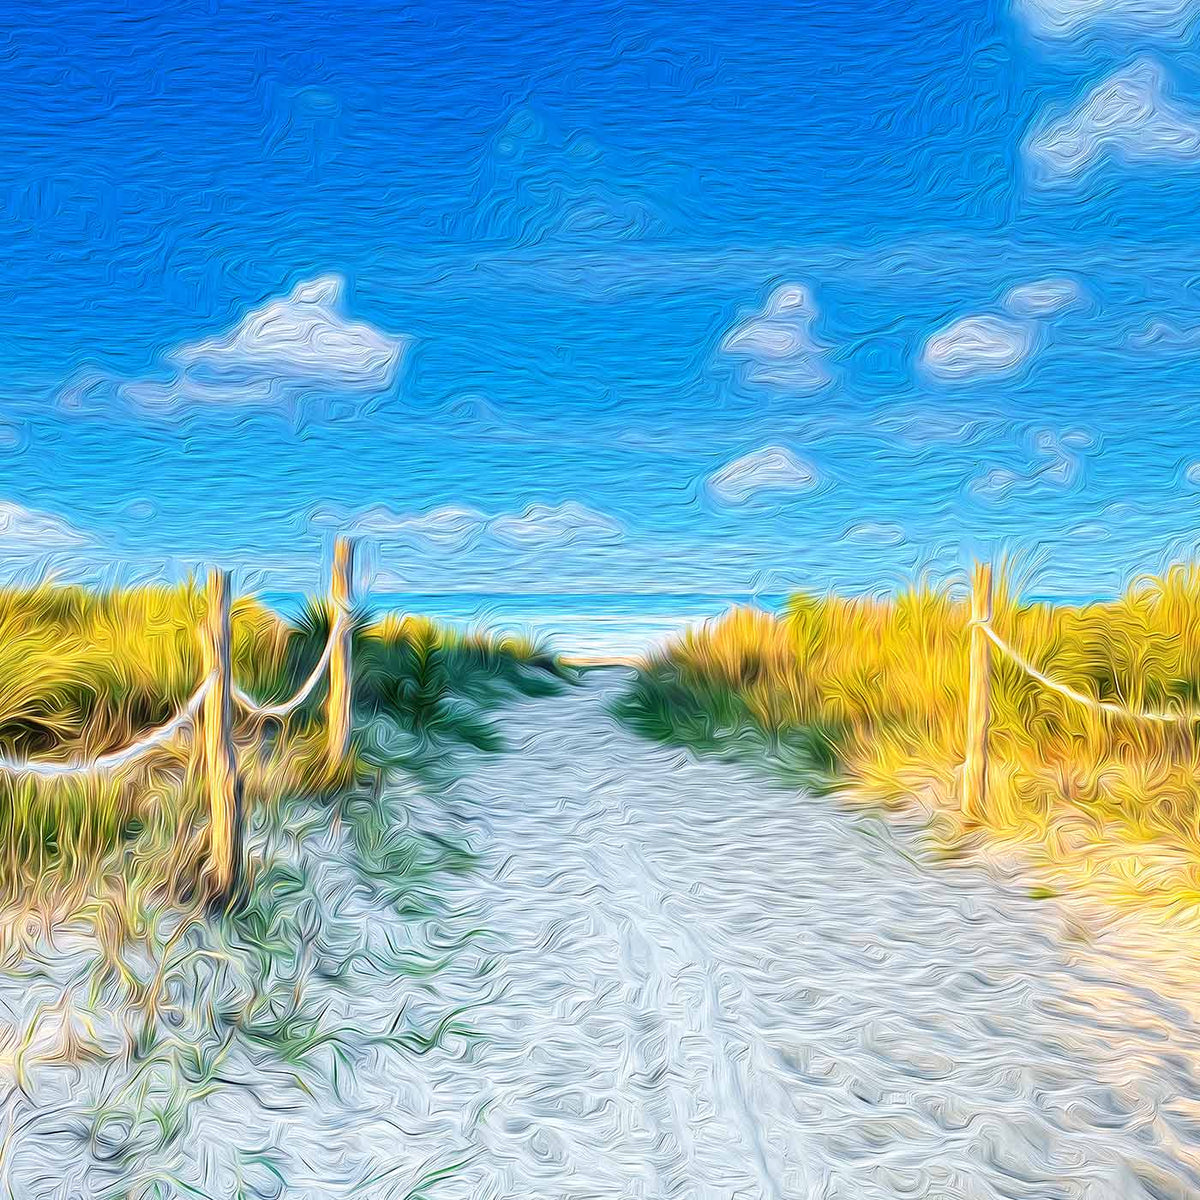 Road to the Beach (Plum Island)